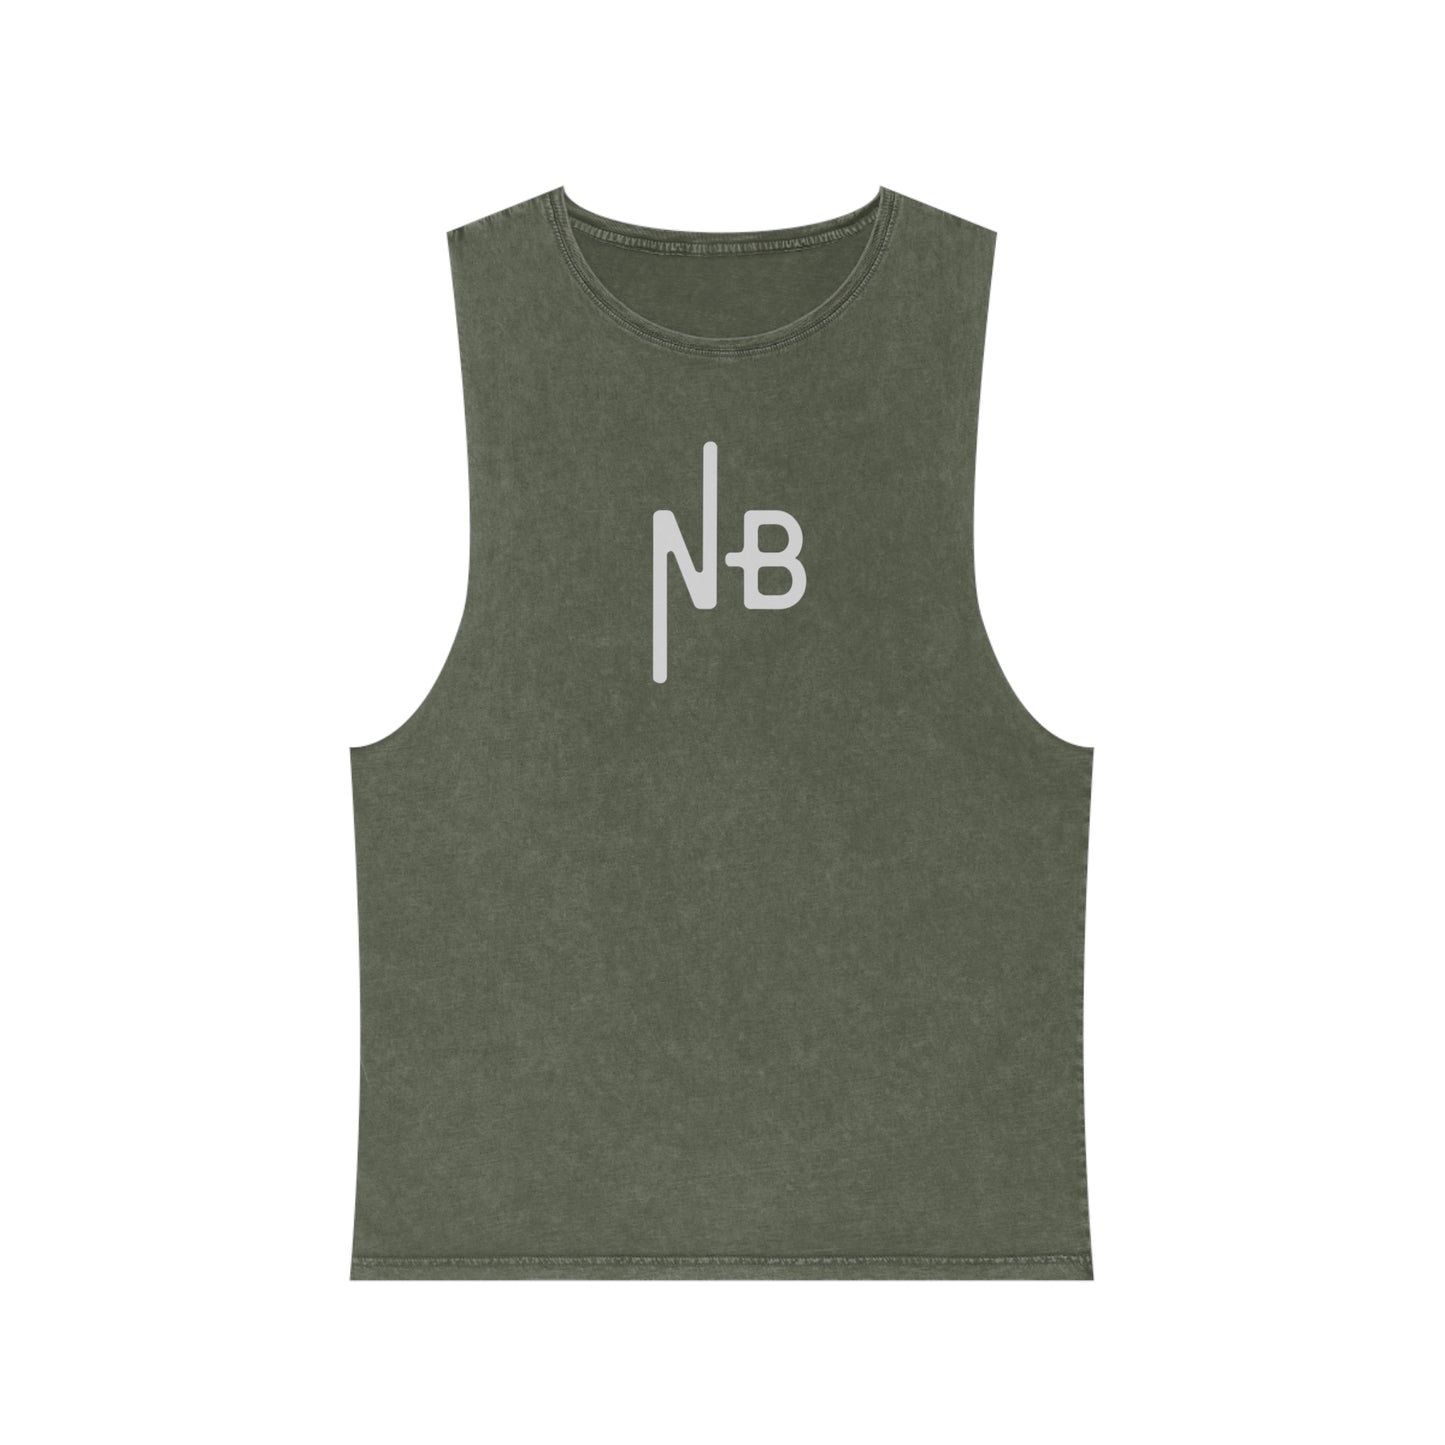 Stonewash Tank Top with NB Northern Beaches logo